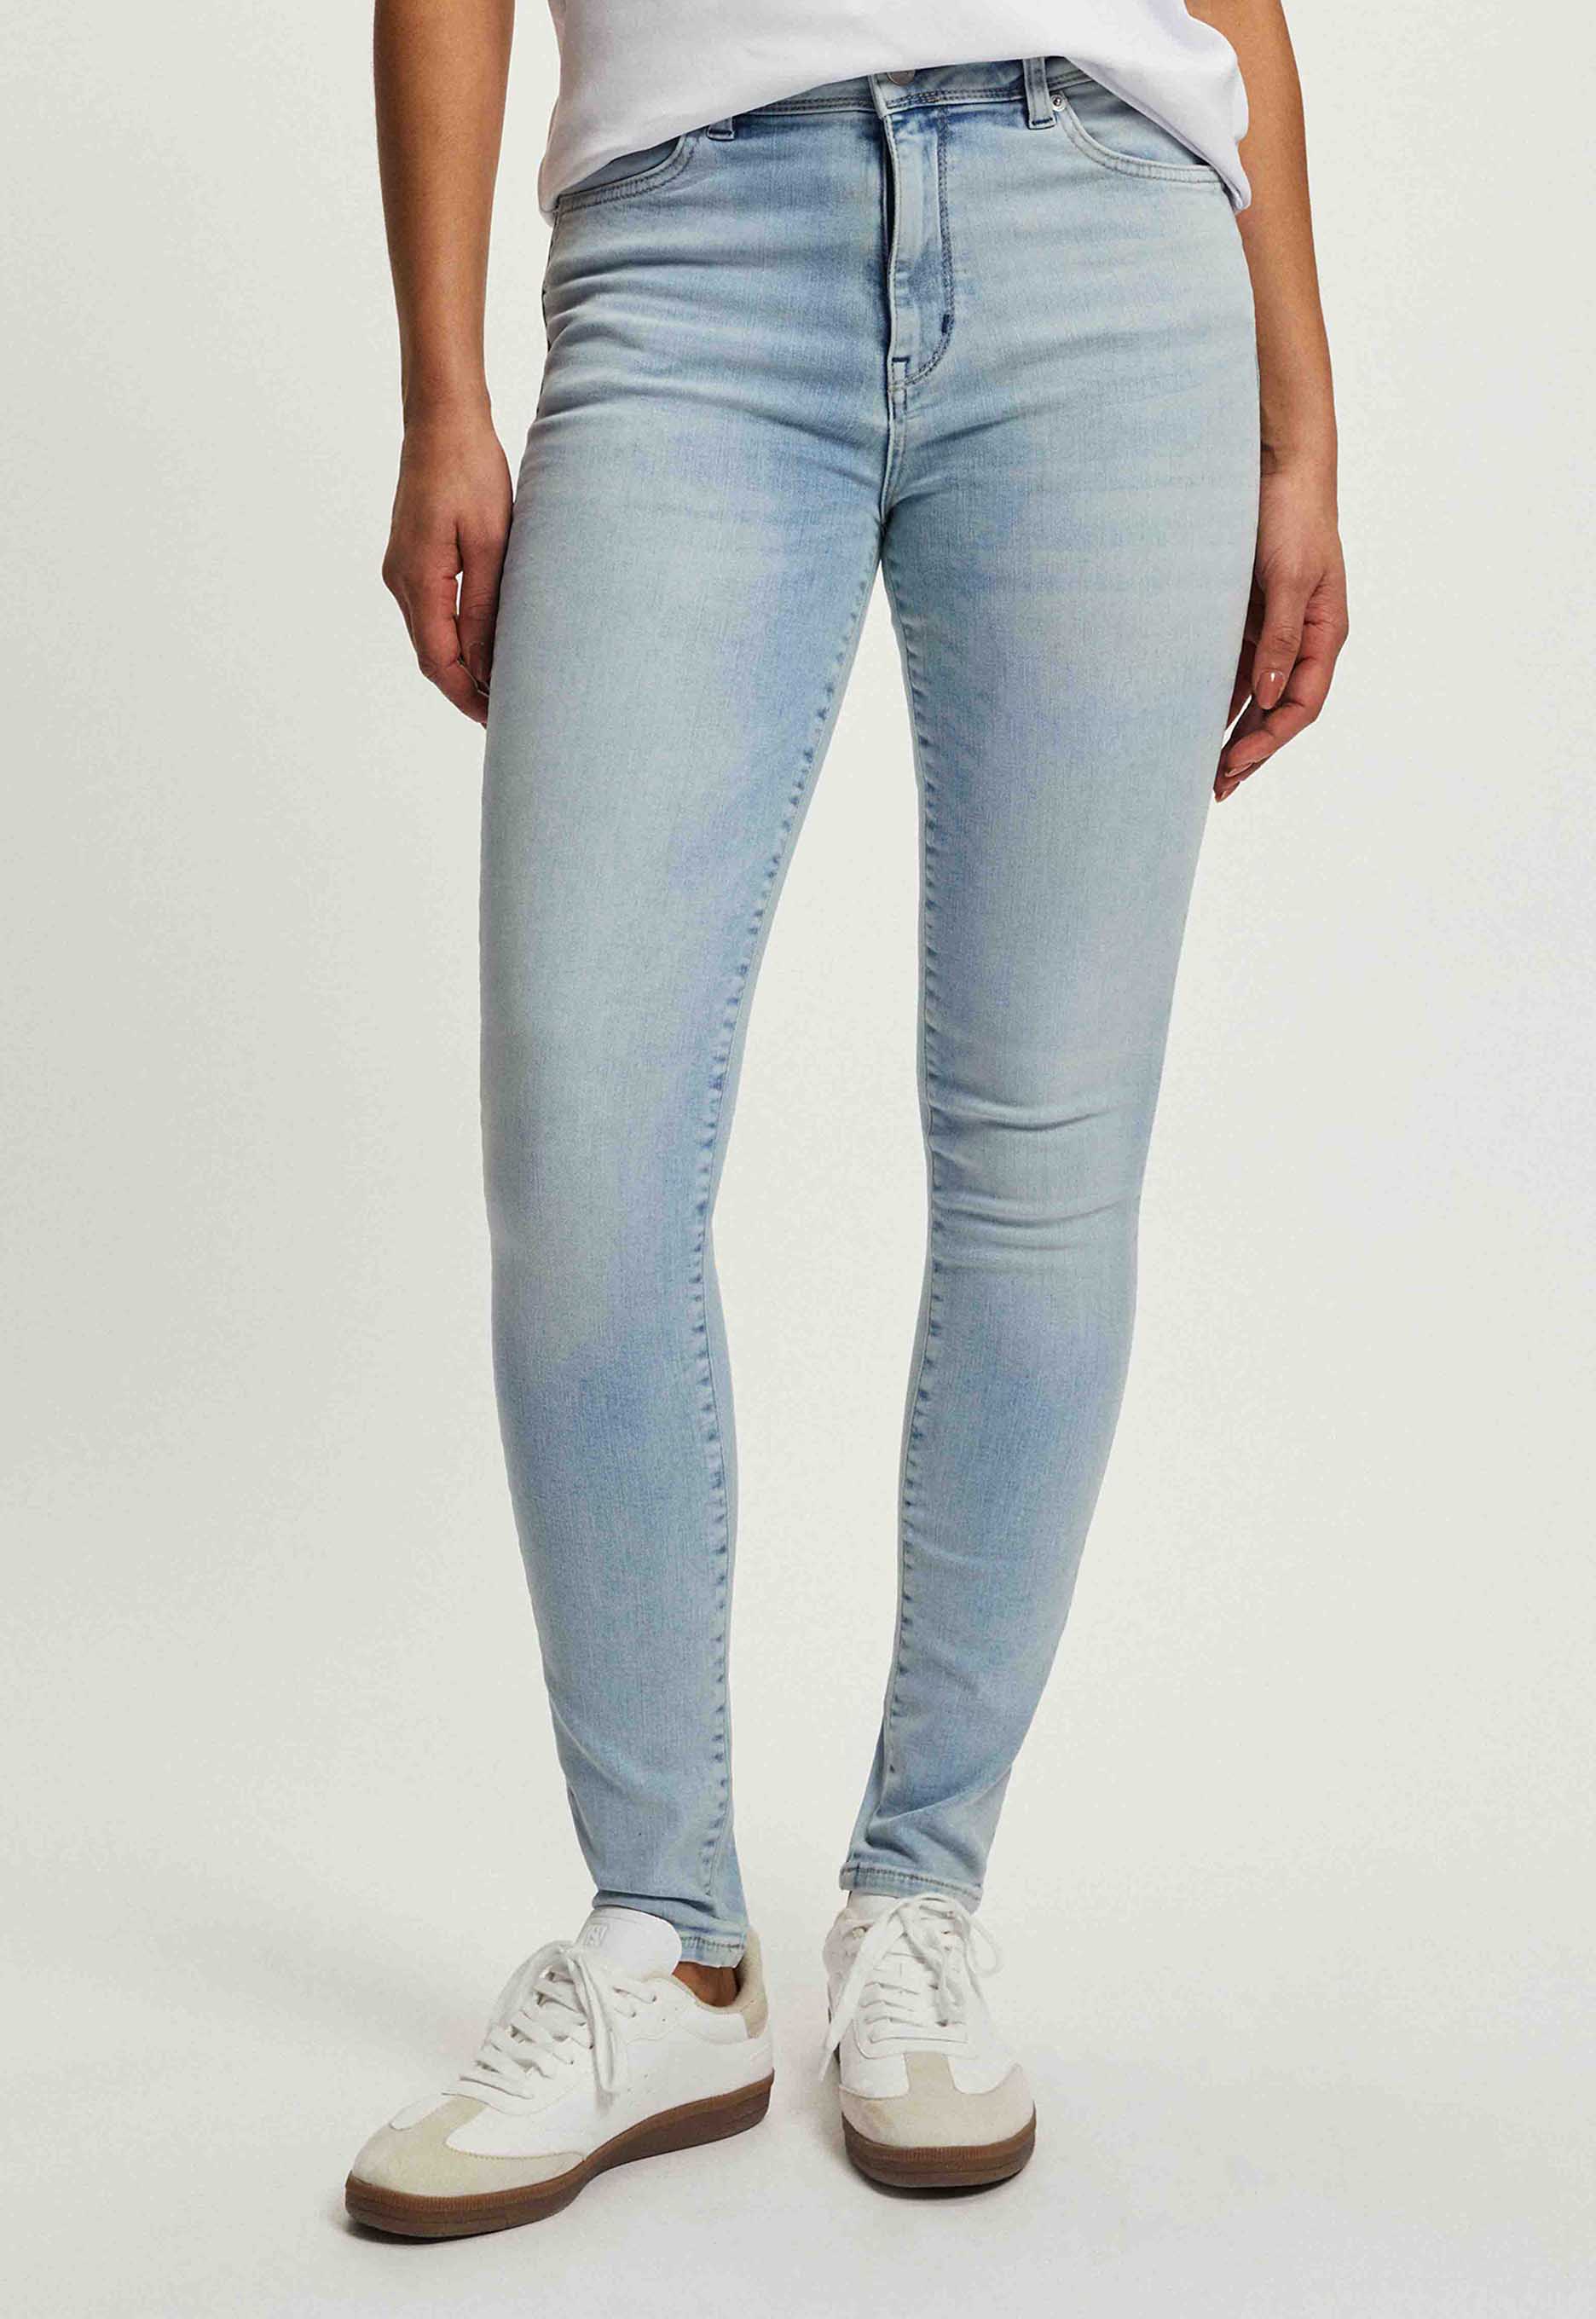 Silvercreek Doris Super Skinny Jeans